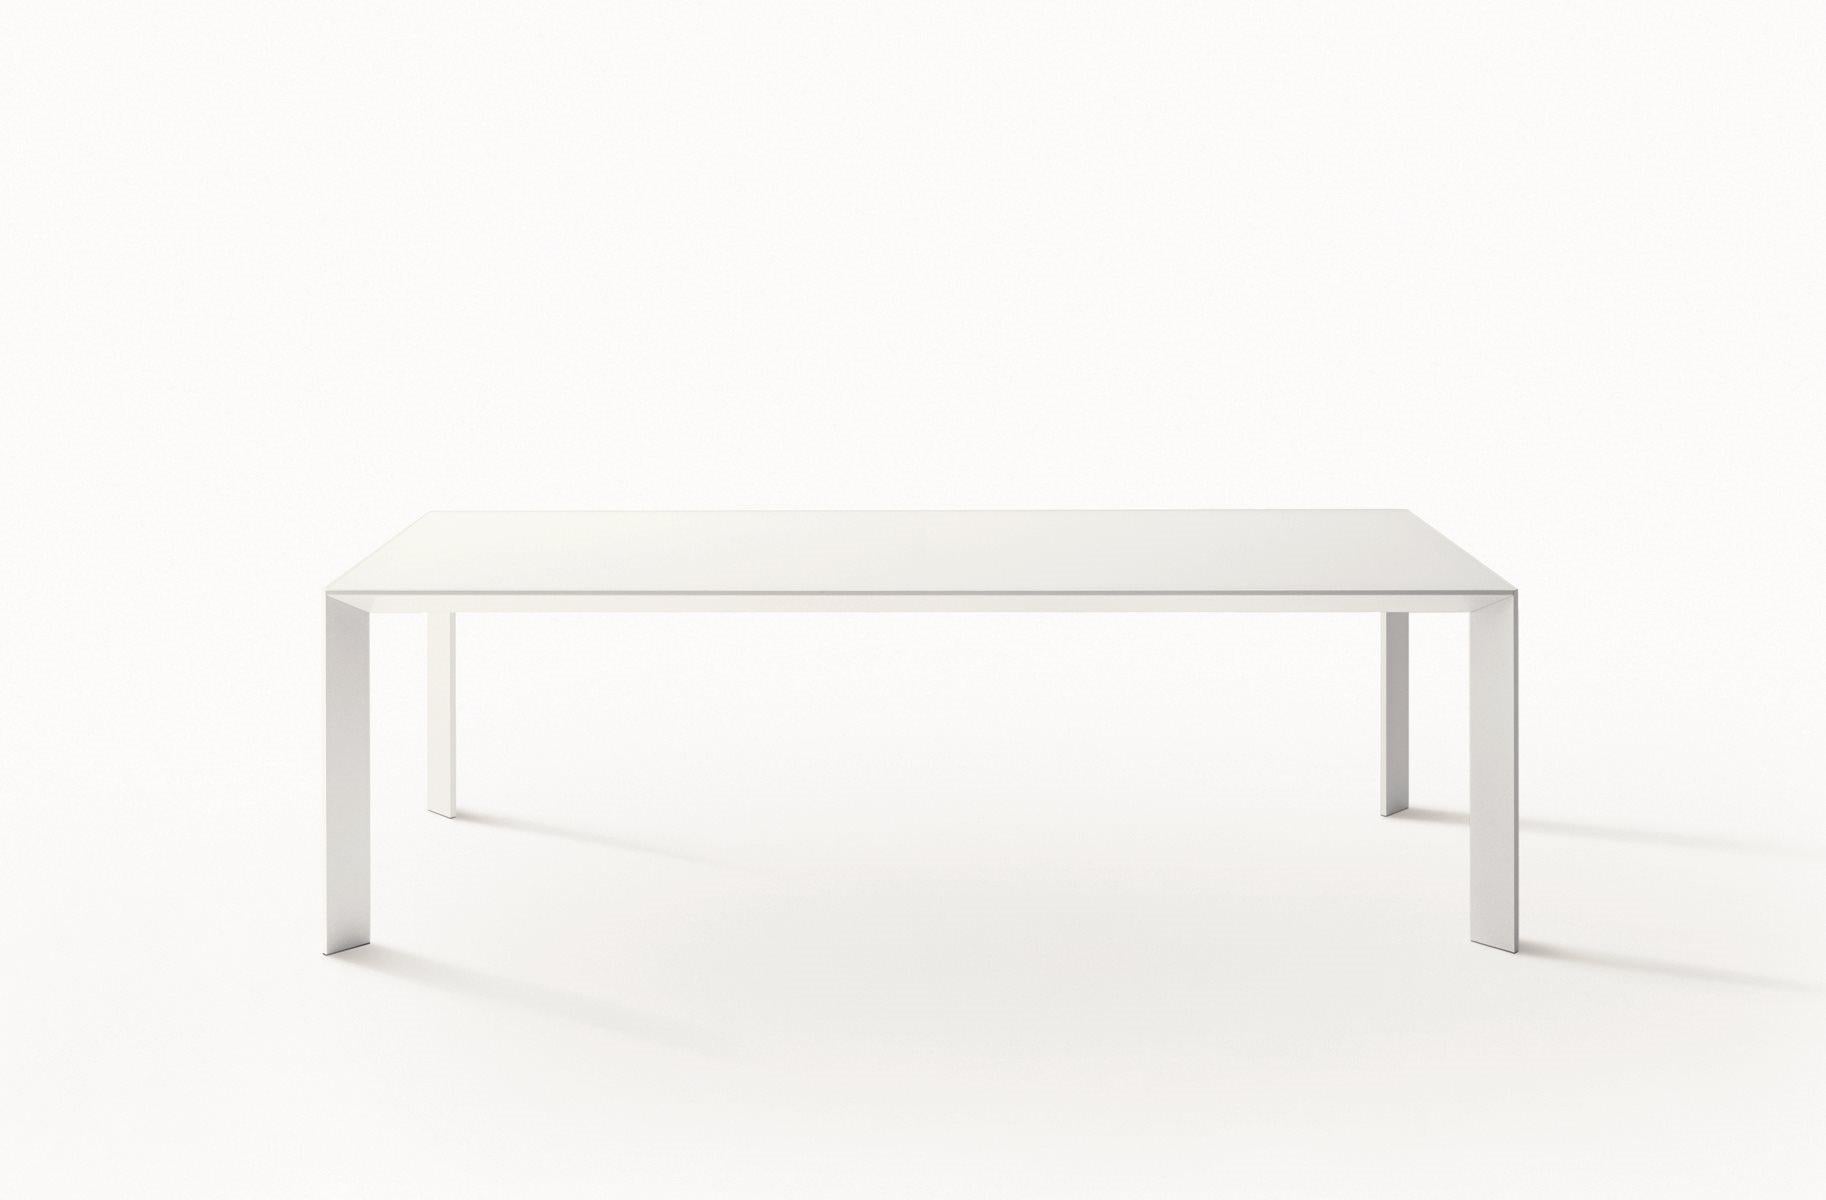 Desalto Mac Table Designed by Pierluigi Cerri 2